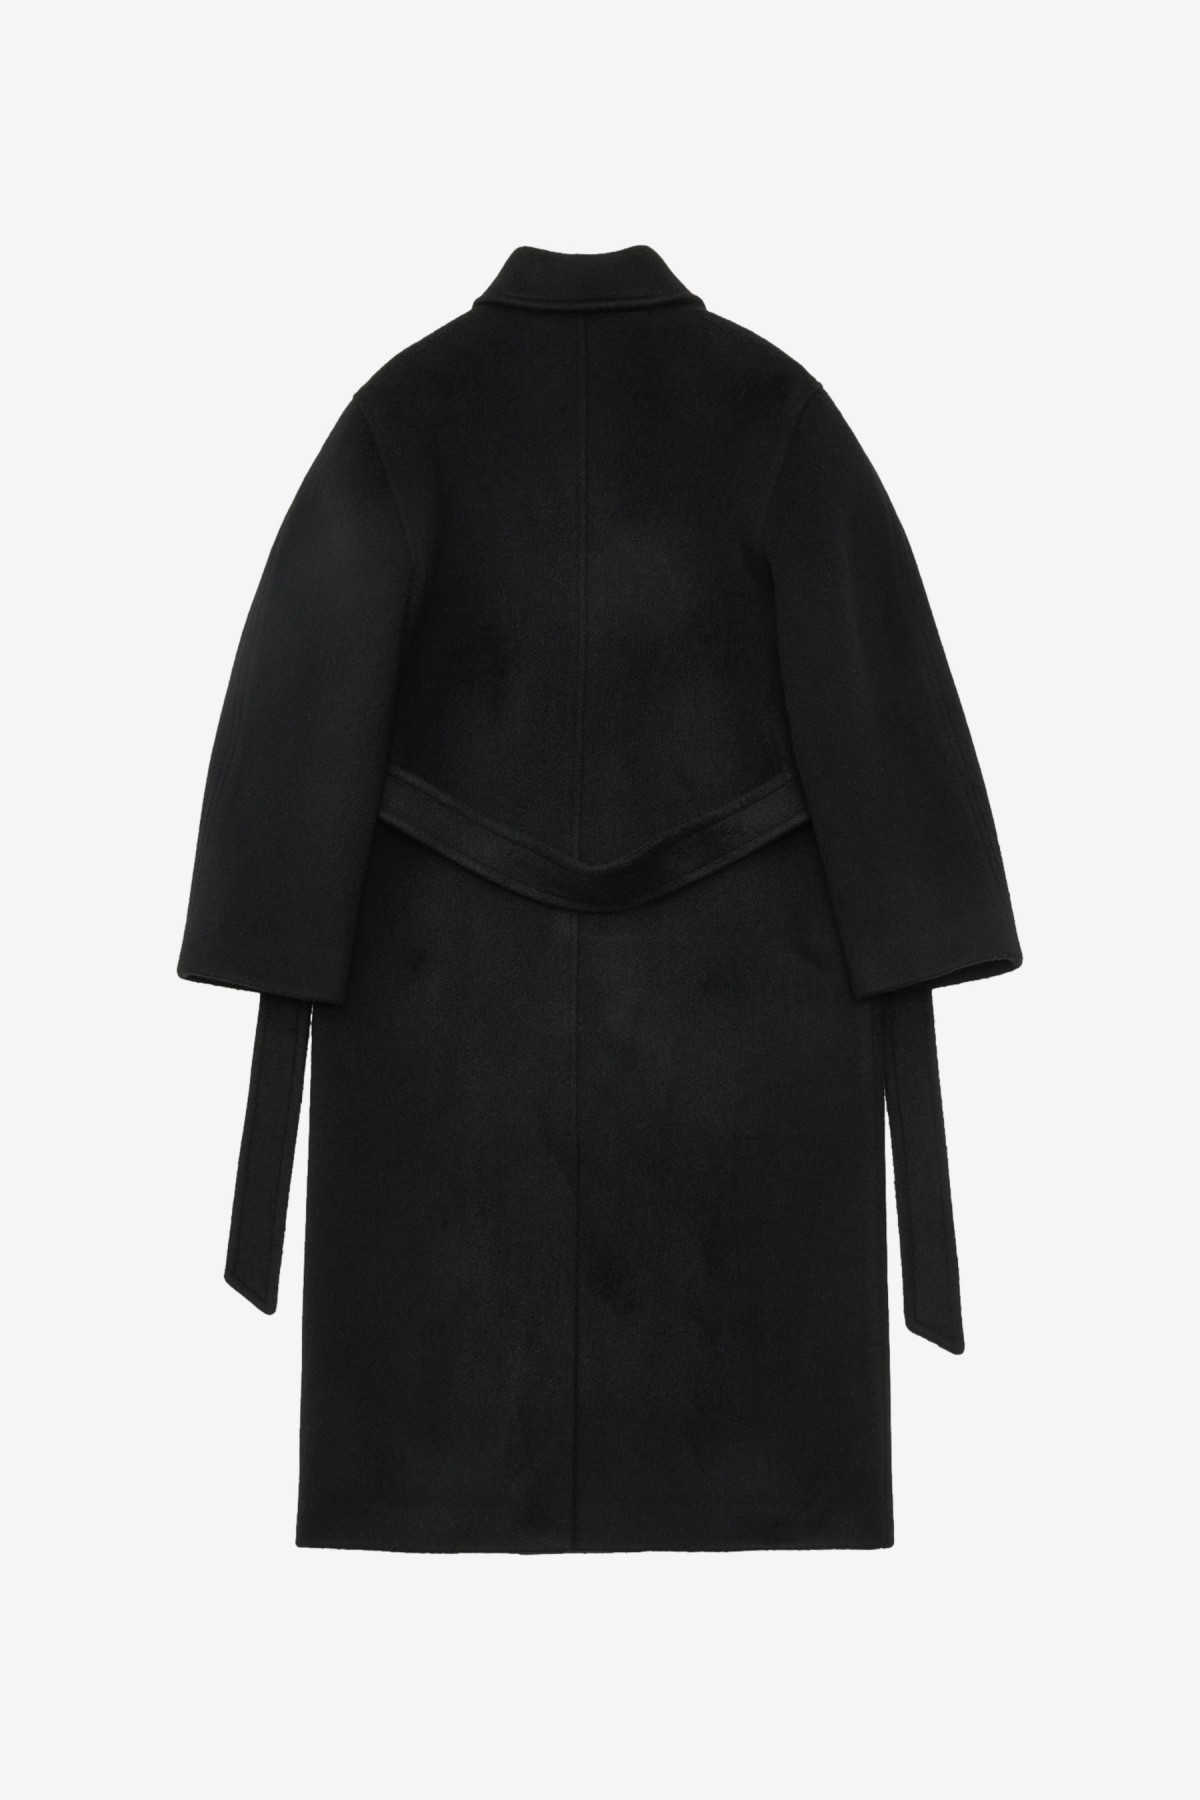 Amomento Hourglass Long Coat in Black